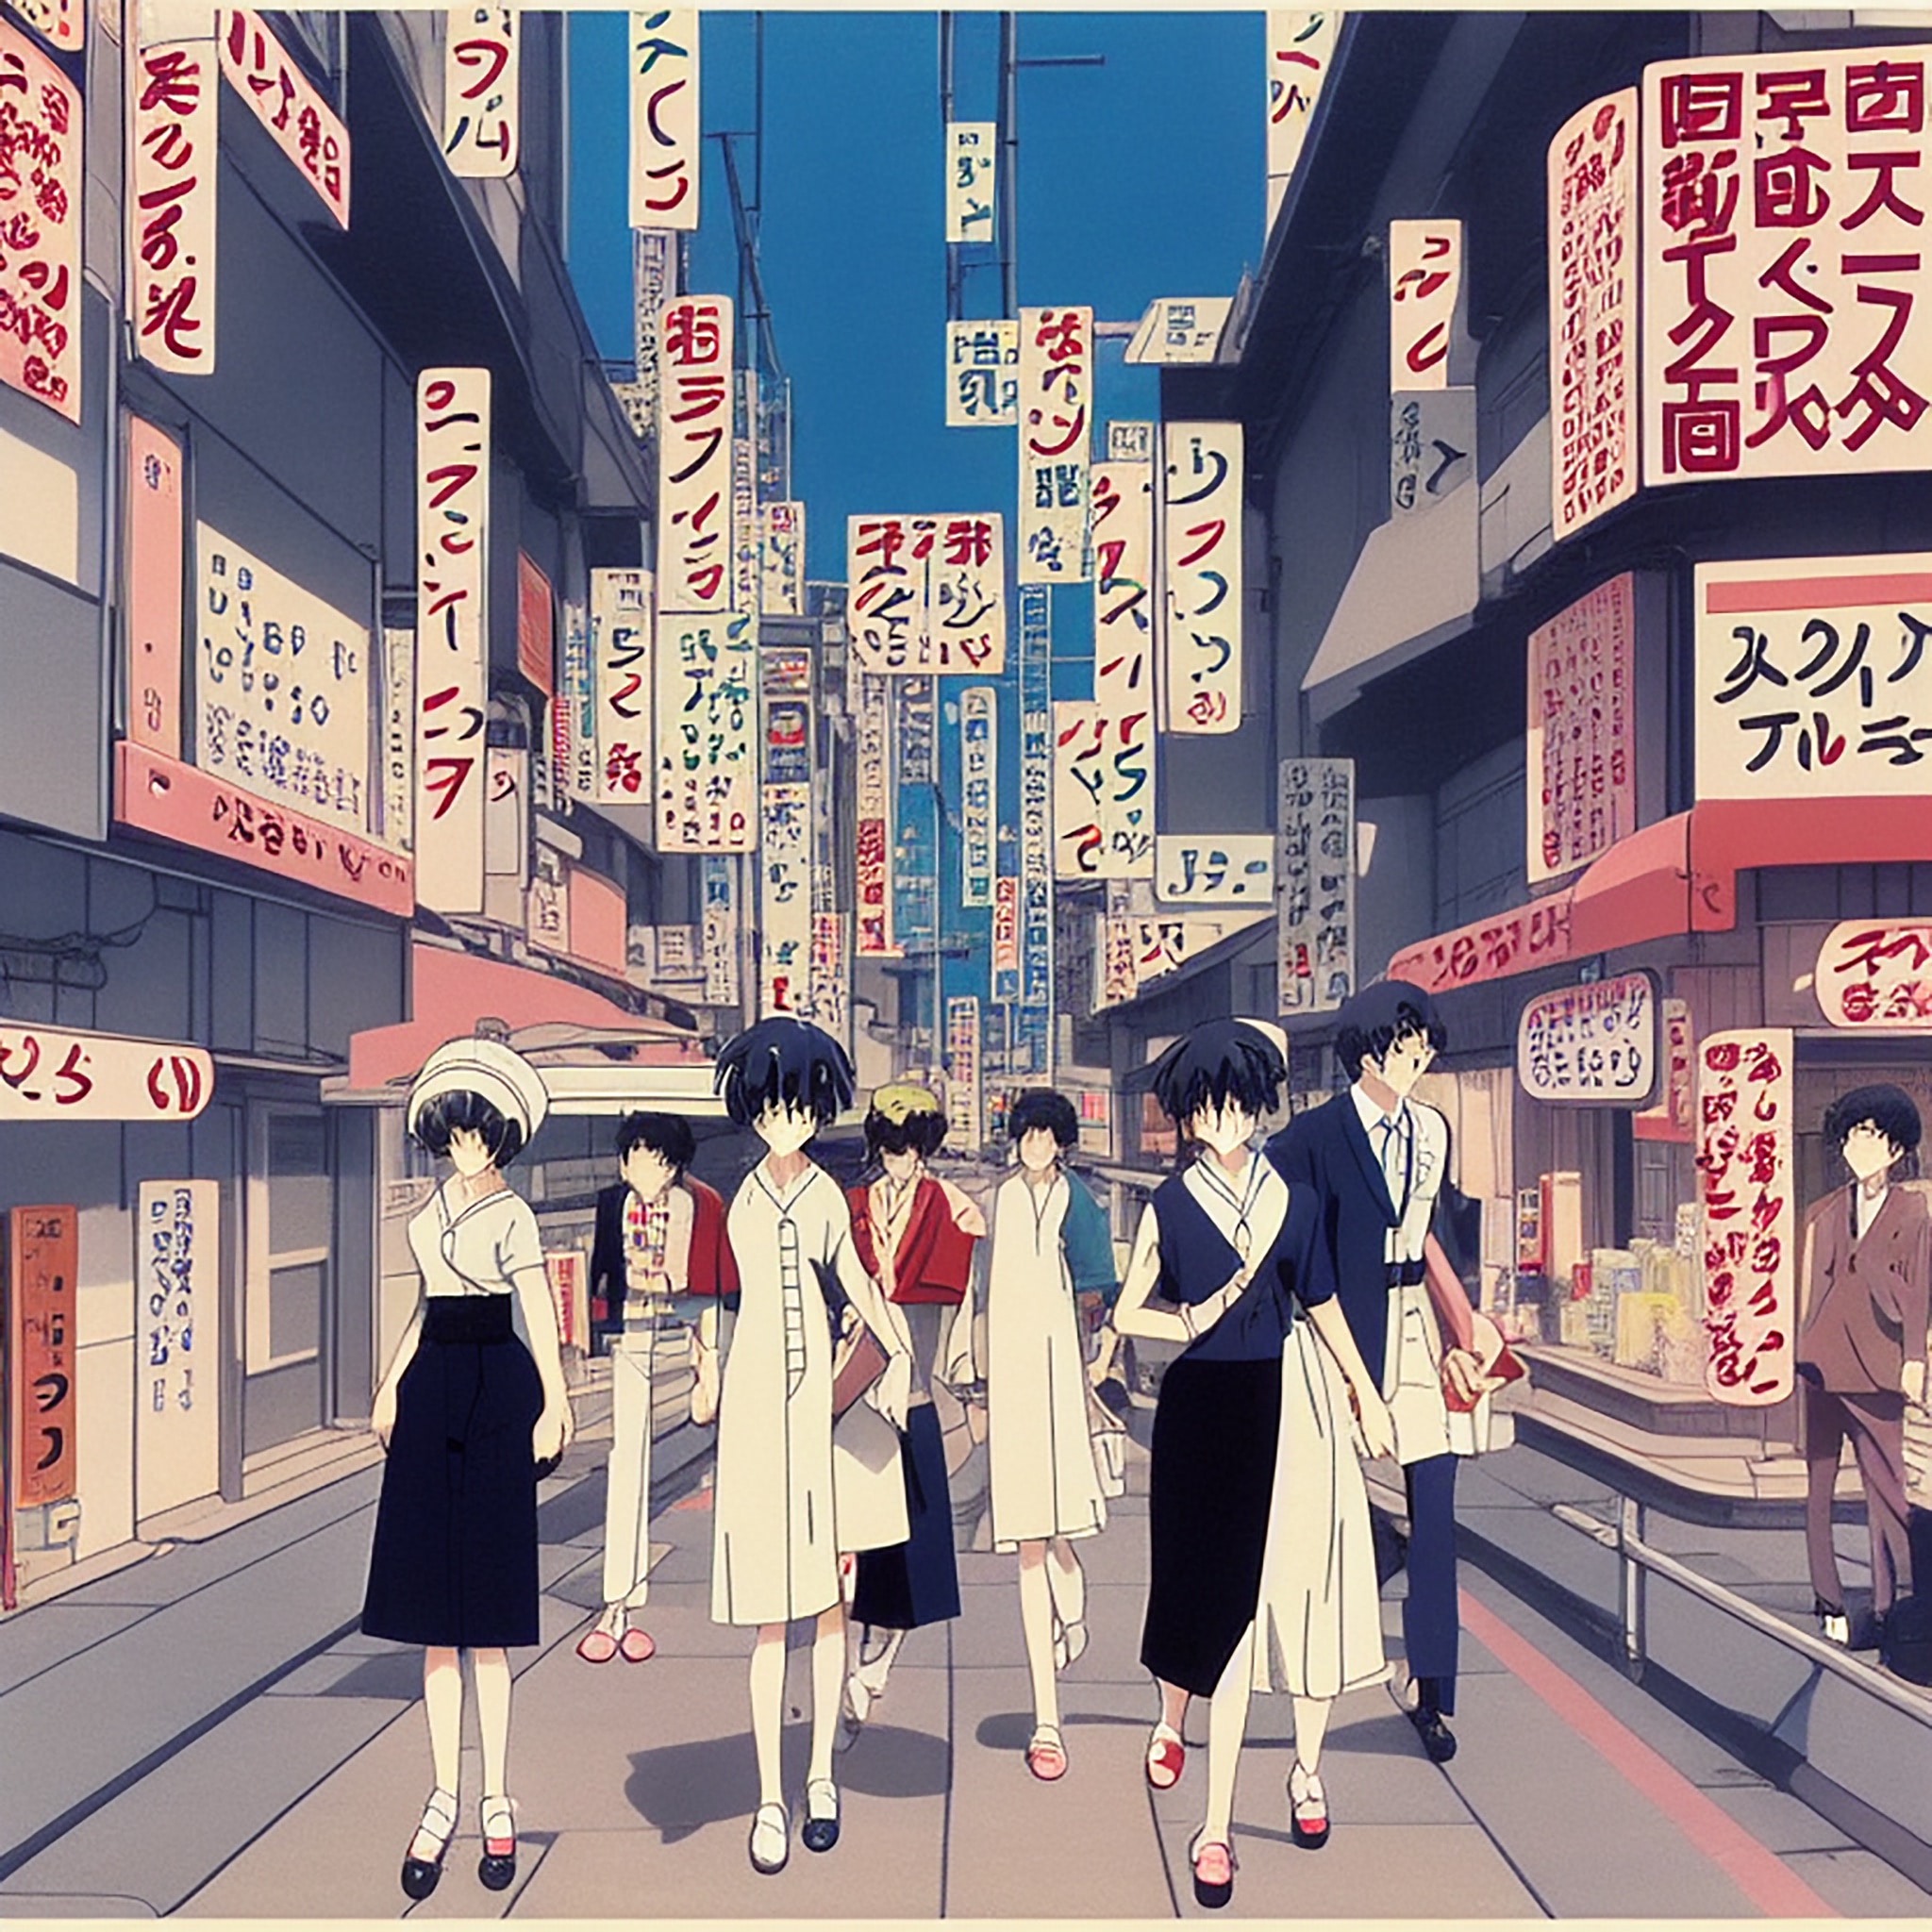 city-pop-cover-tokyo-1960s-anime-style-city-2